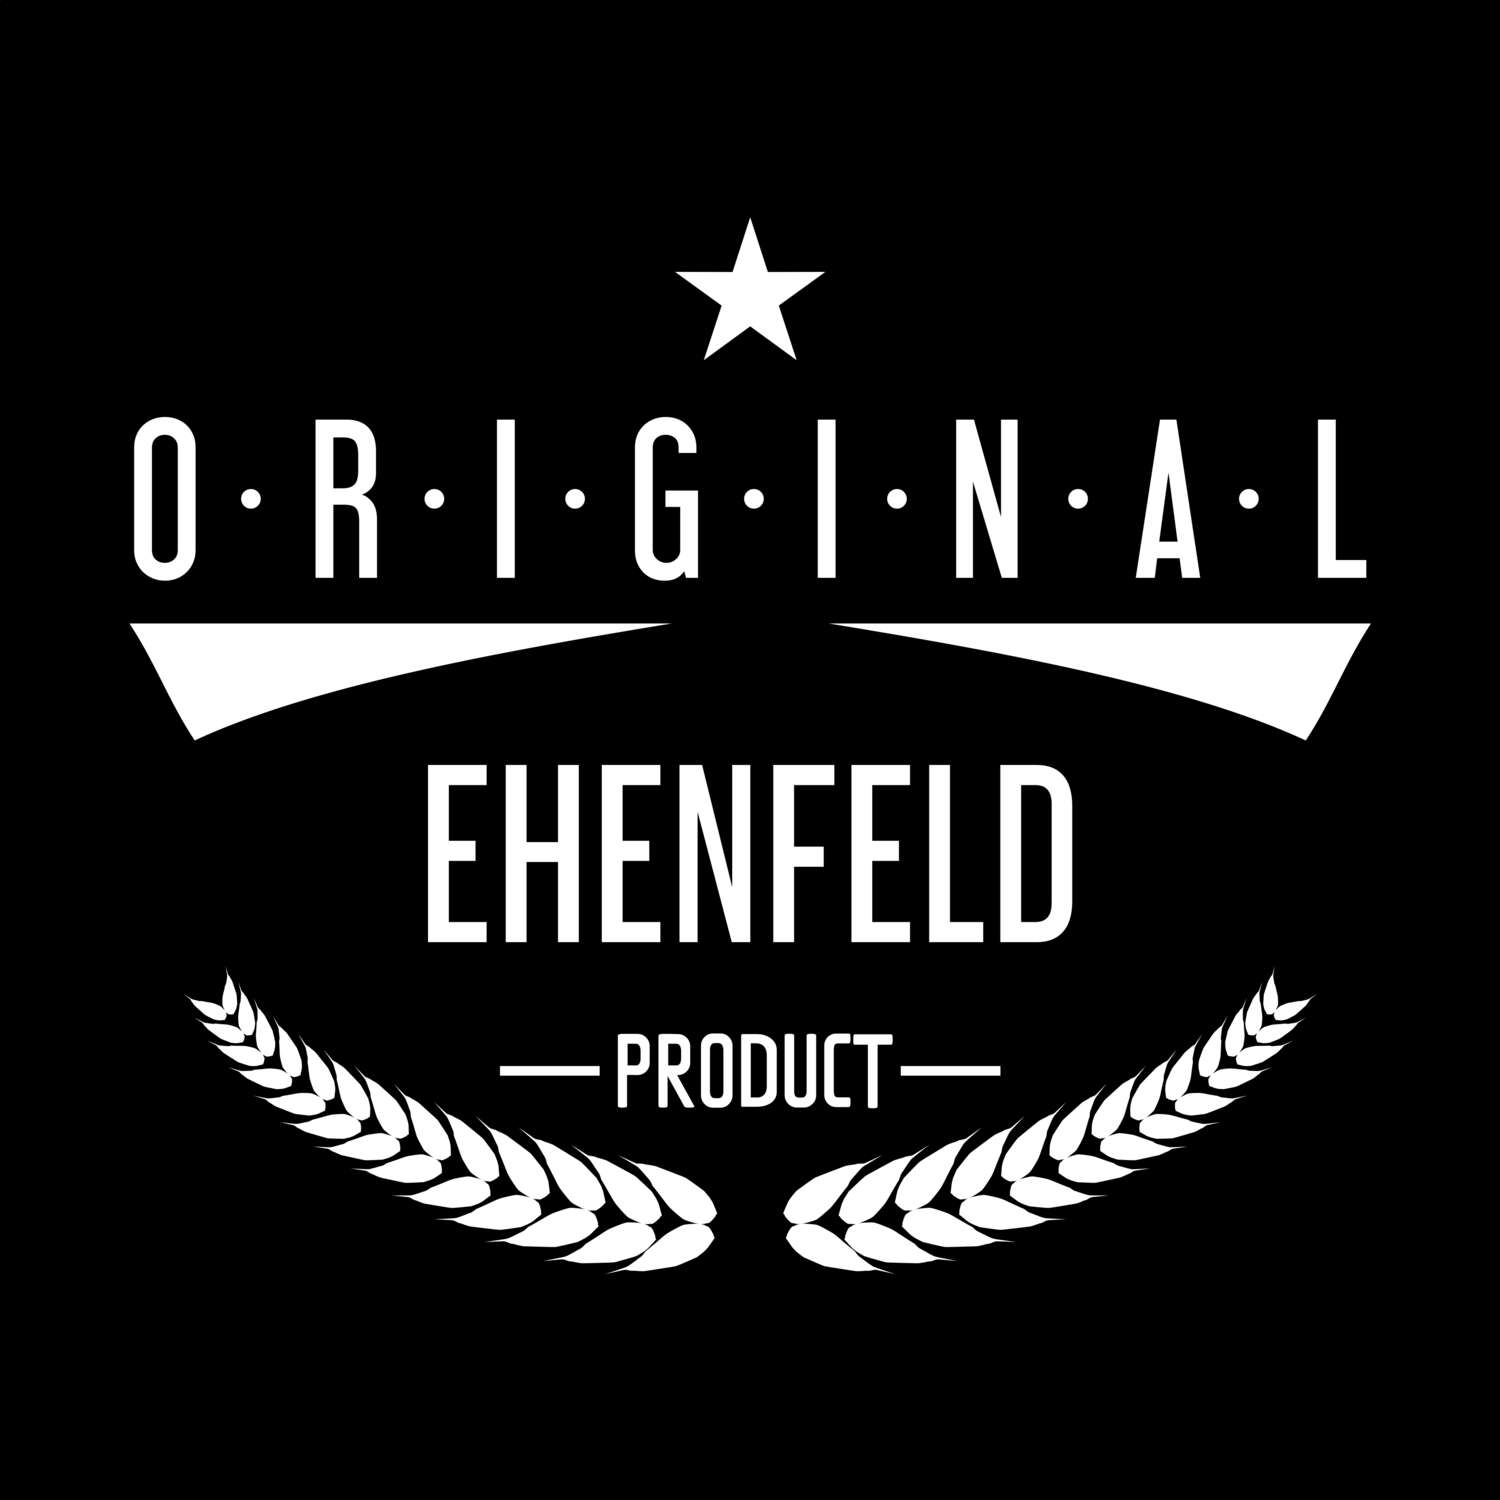 Ehenfeld T-Shirt »Original Product«